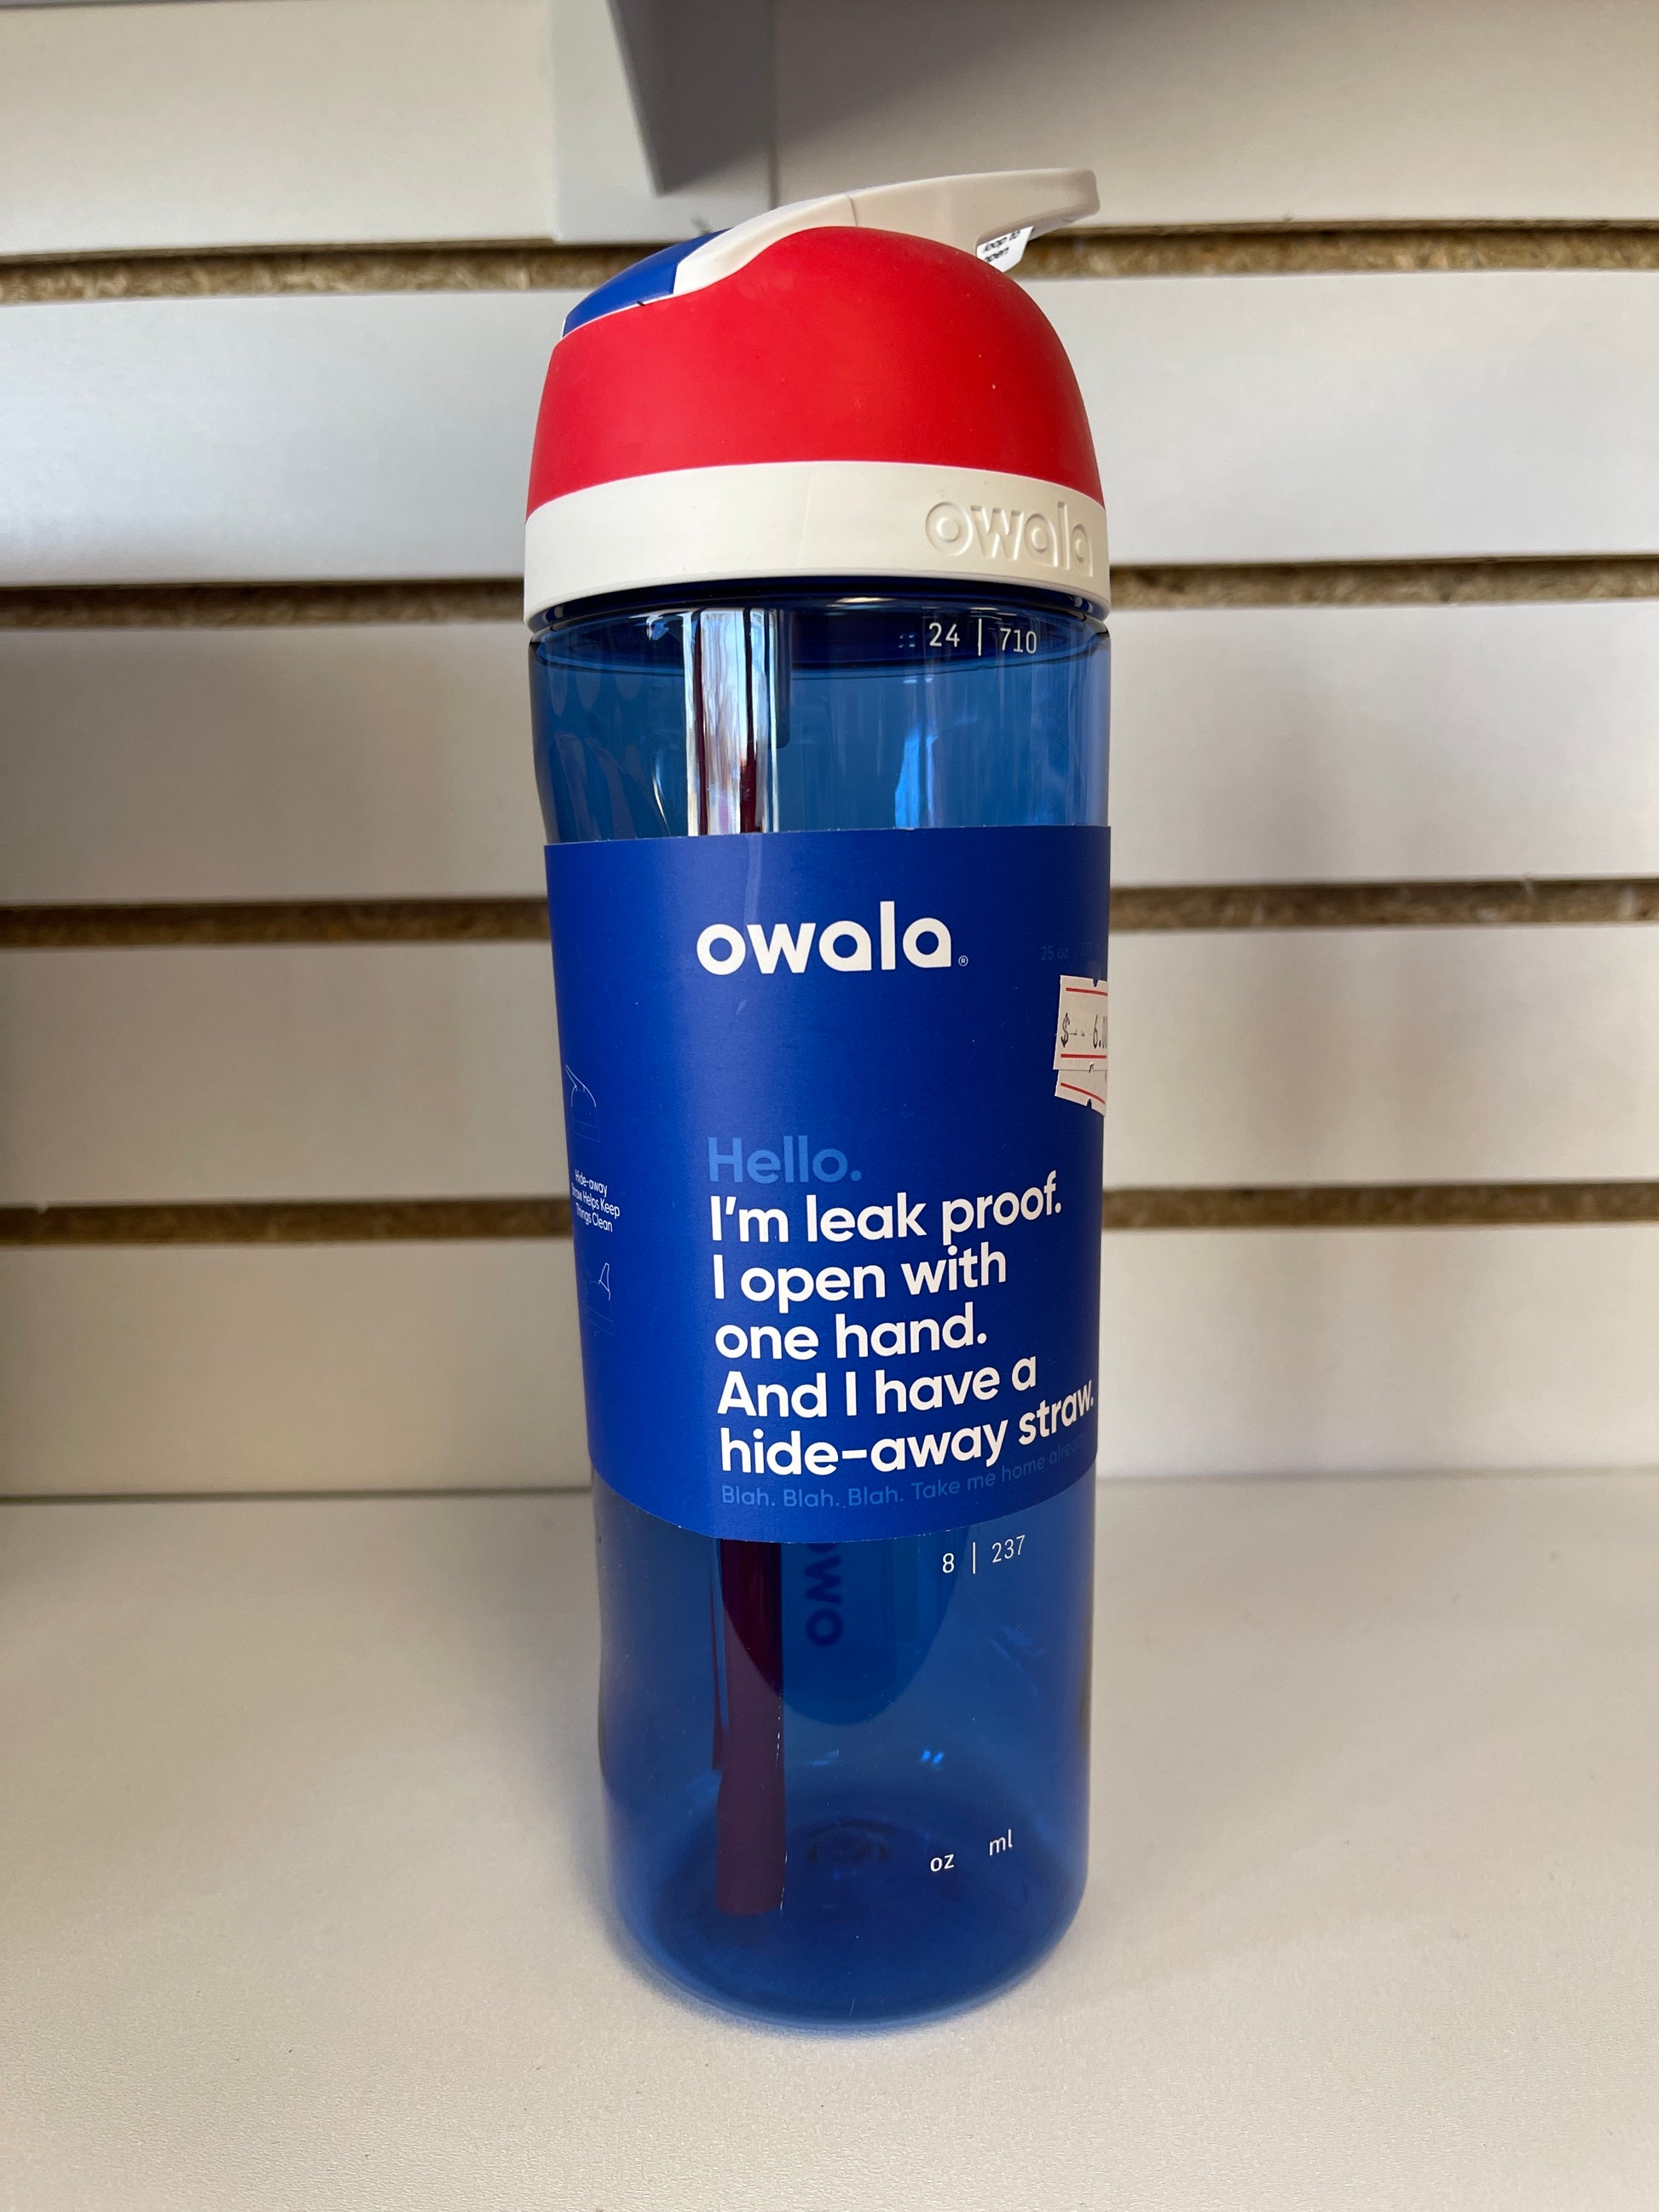 OWALA Water Bottle Review 